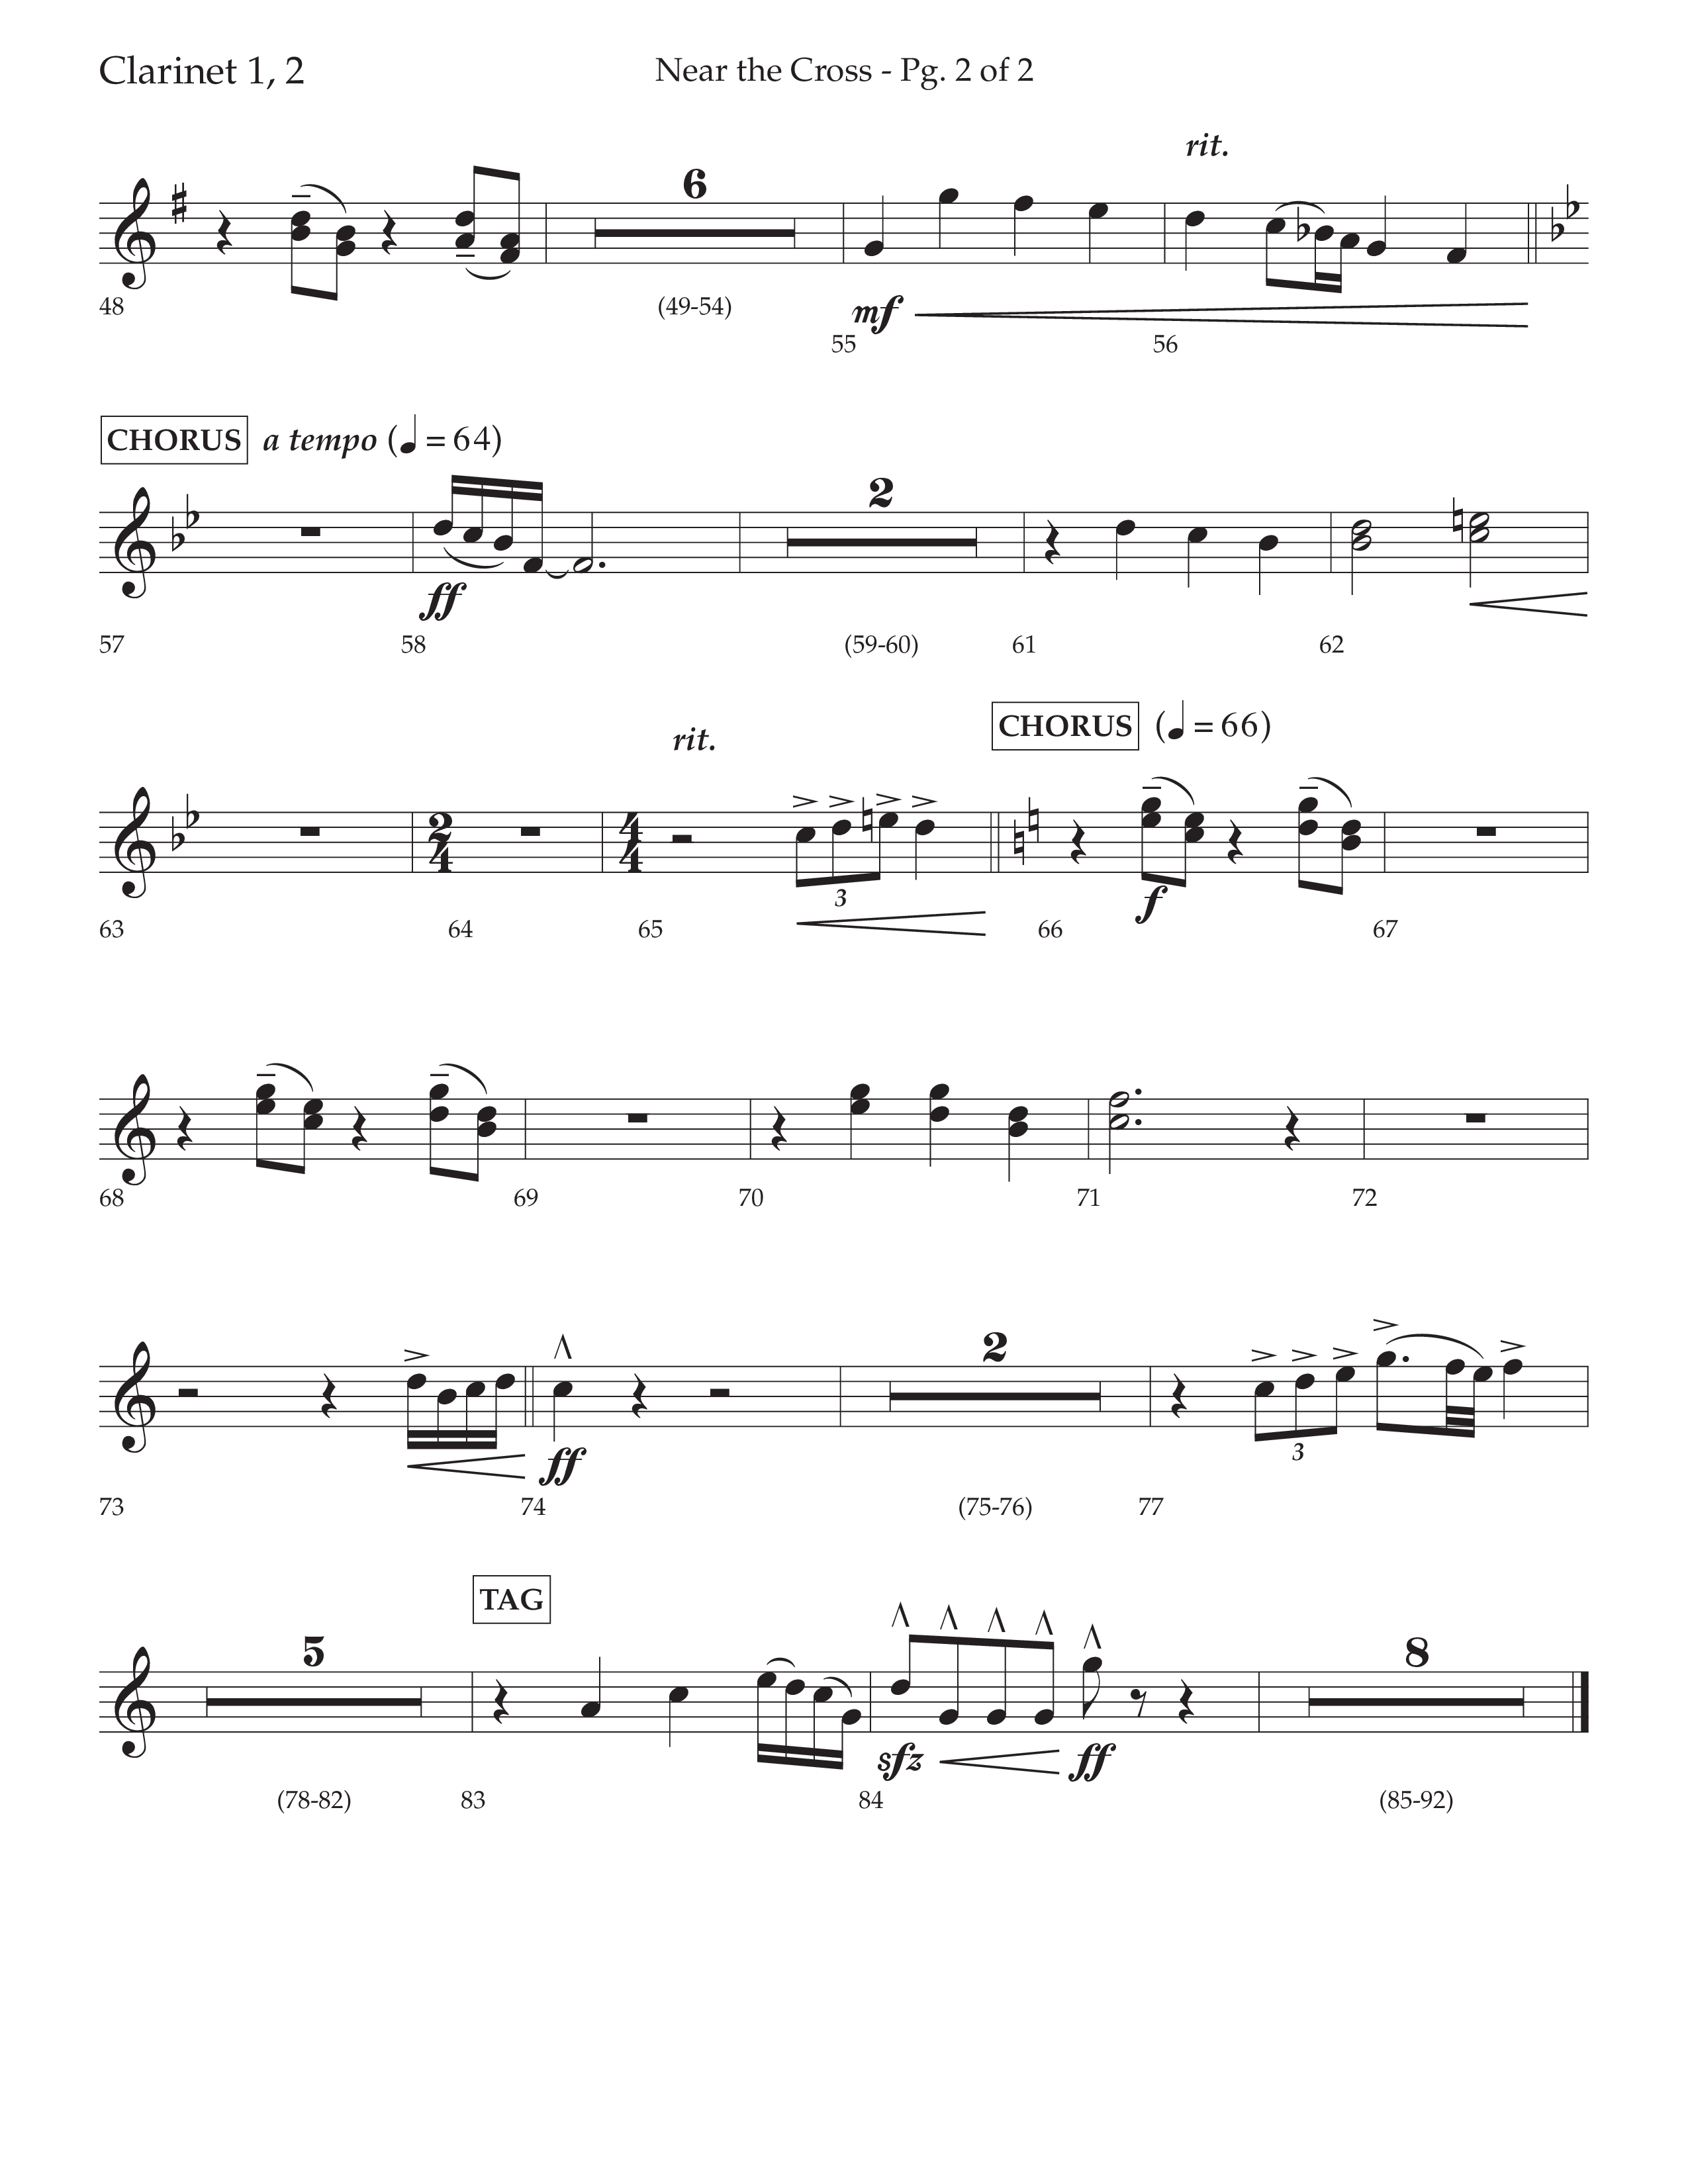 Near The Cross (Choral Anthem SATB) Clarinet 1/2 (Lifeway Choral / Arr. David Wise / Orch. Cliff Duren)